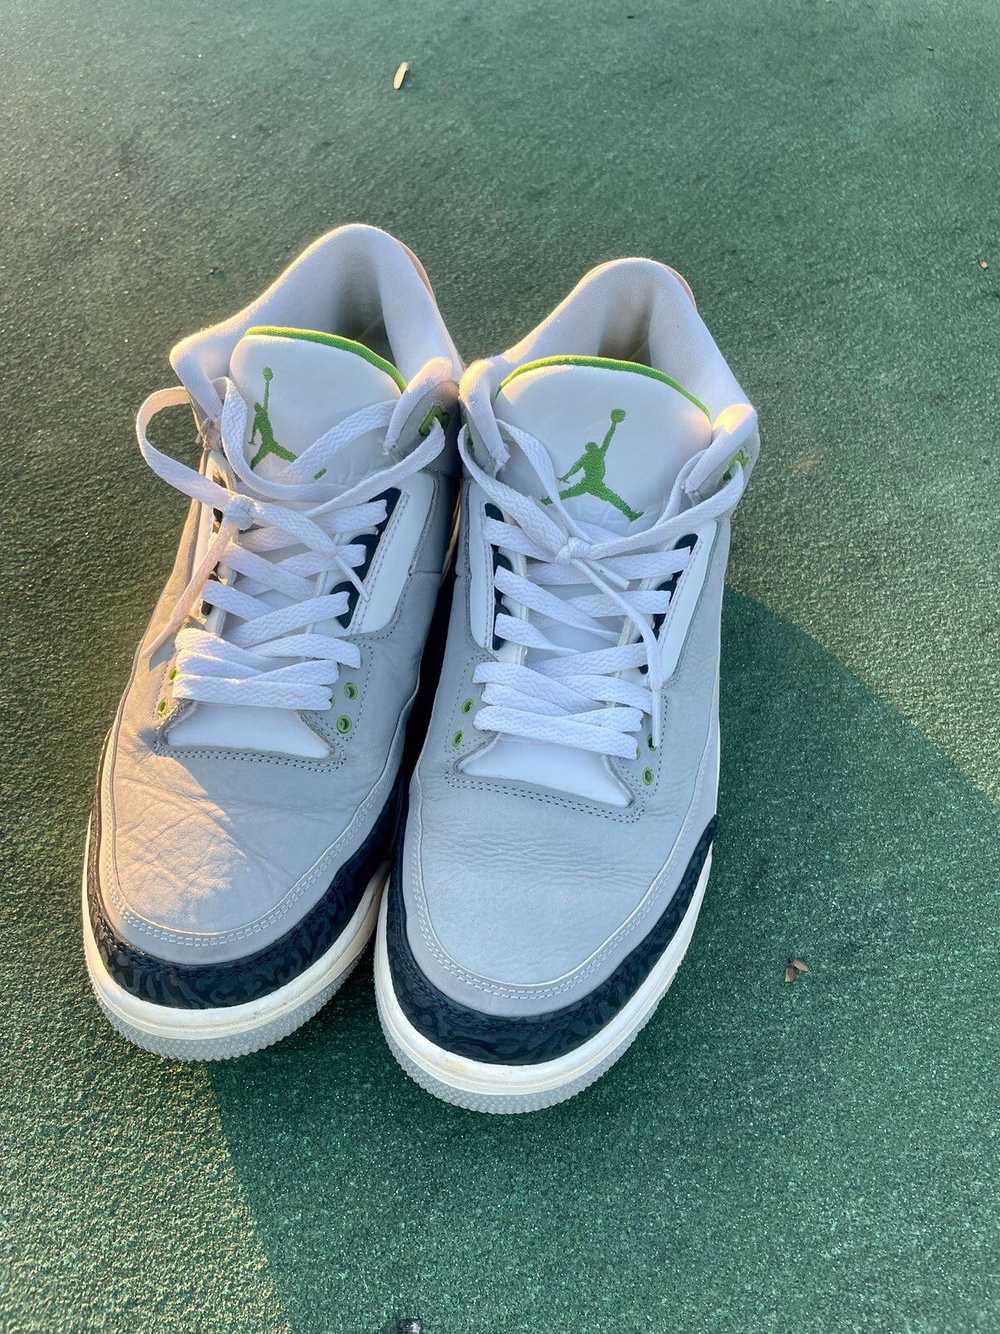 Jordan Brand × Nike Jordan 3 Chlorophyll - image 2